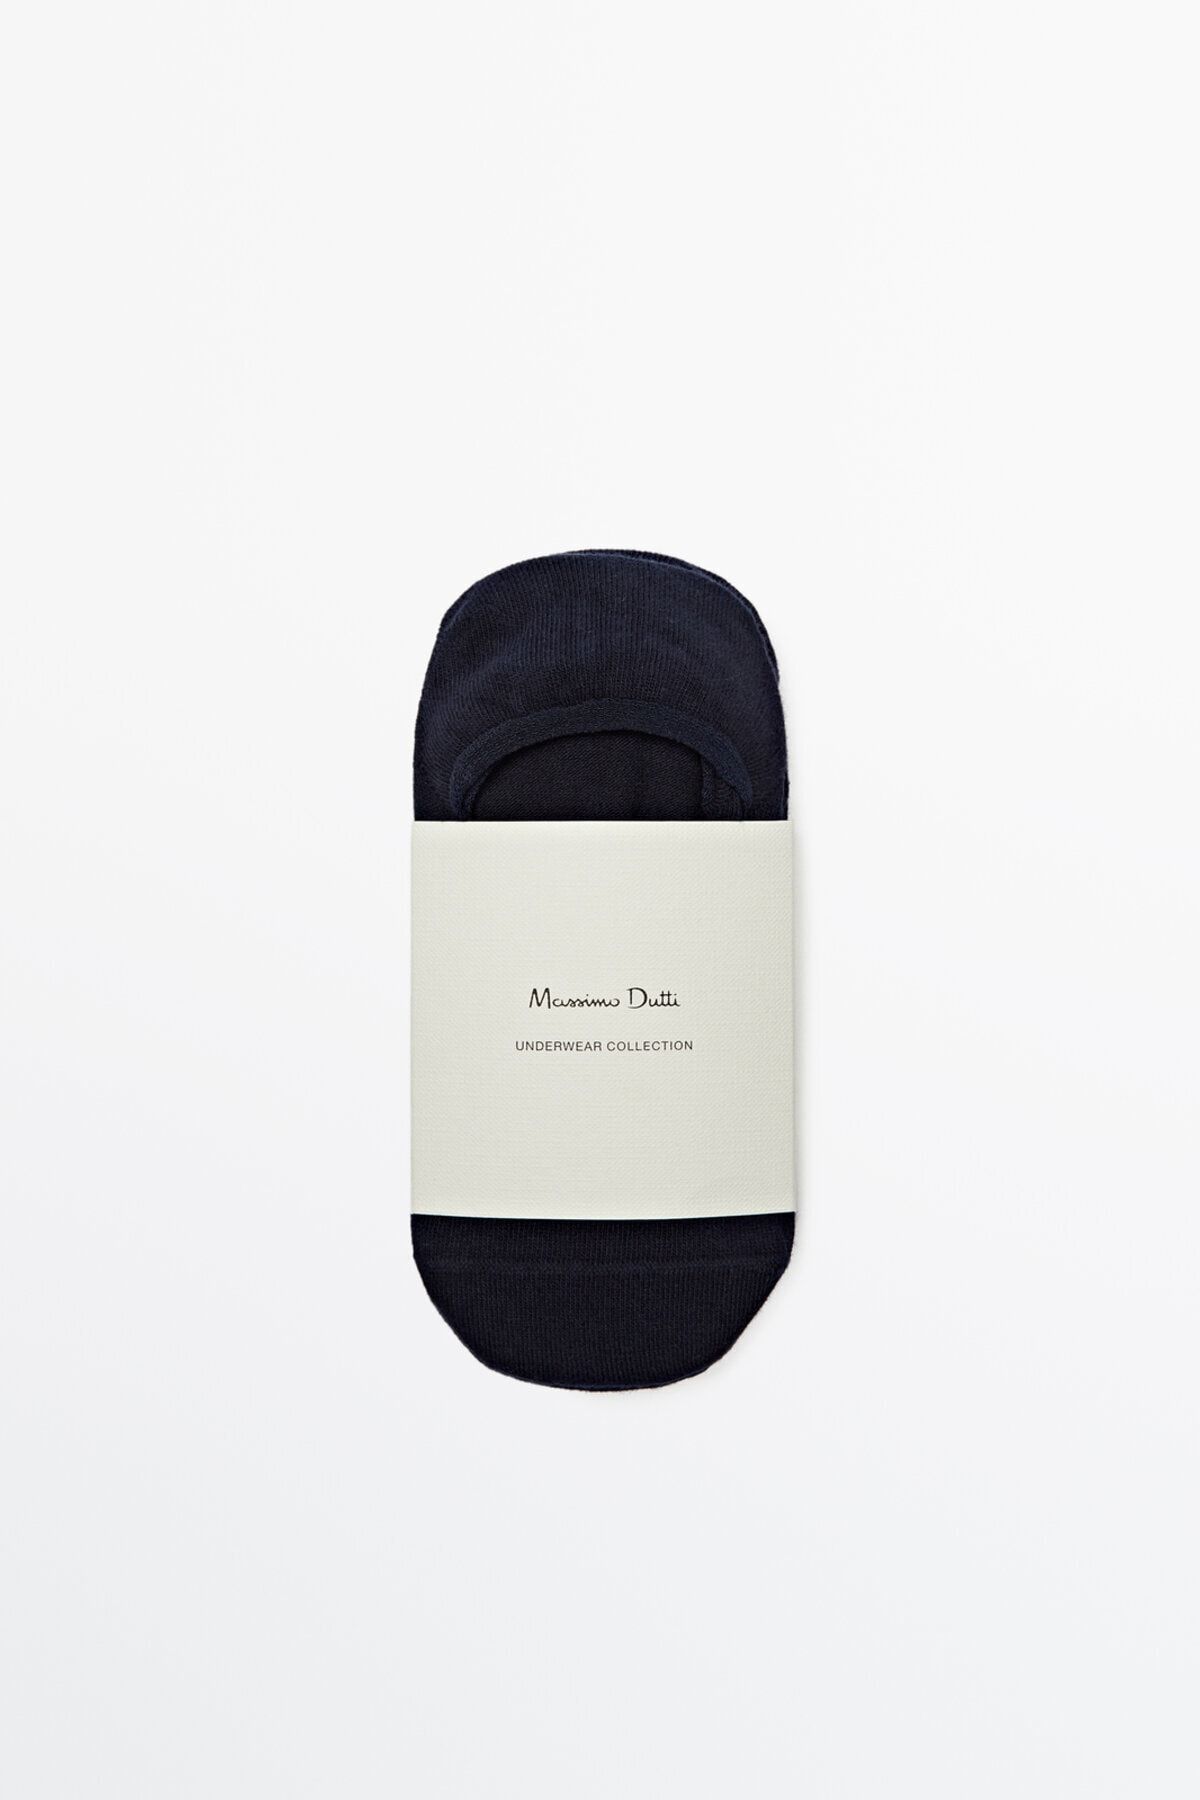 Massimo Dutti Pack Of 3 Cotton Blend No-show Socks